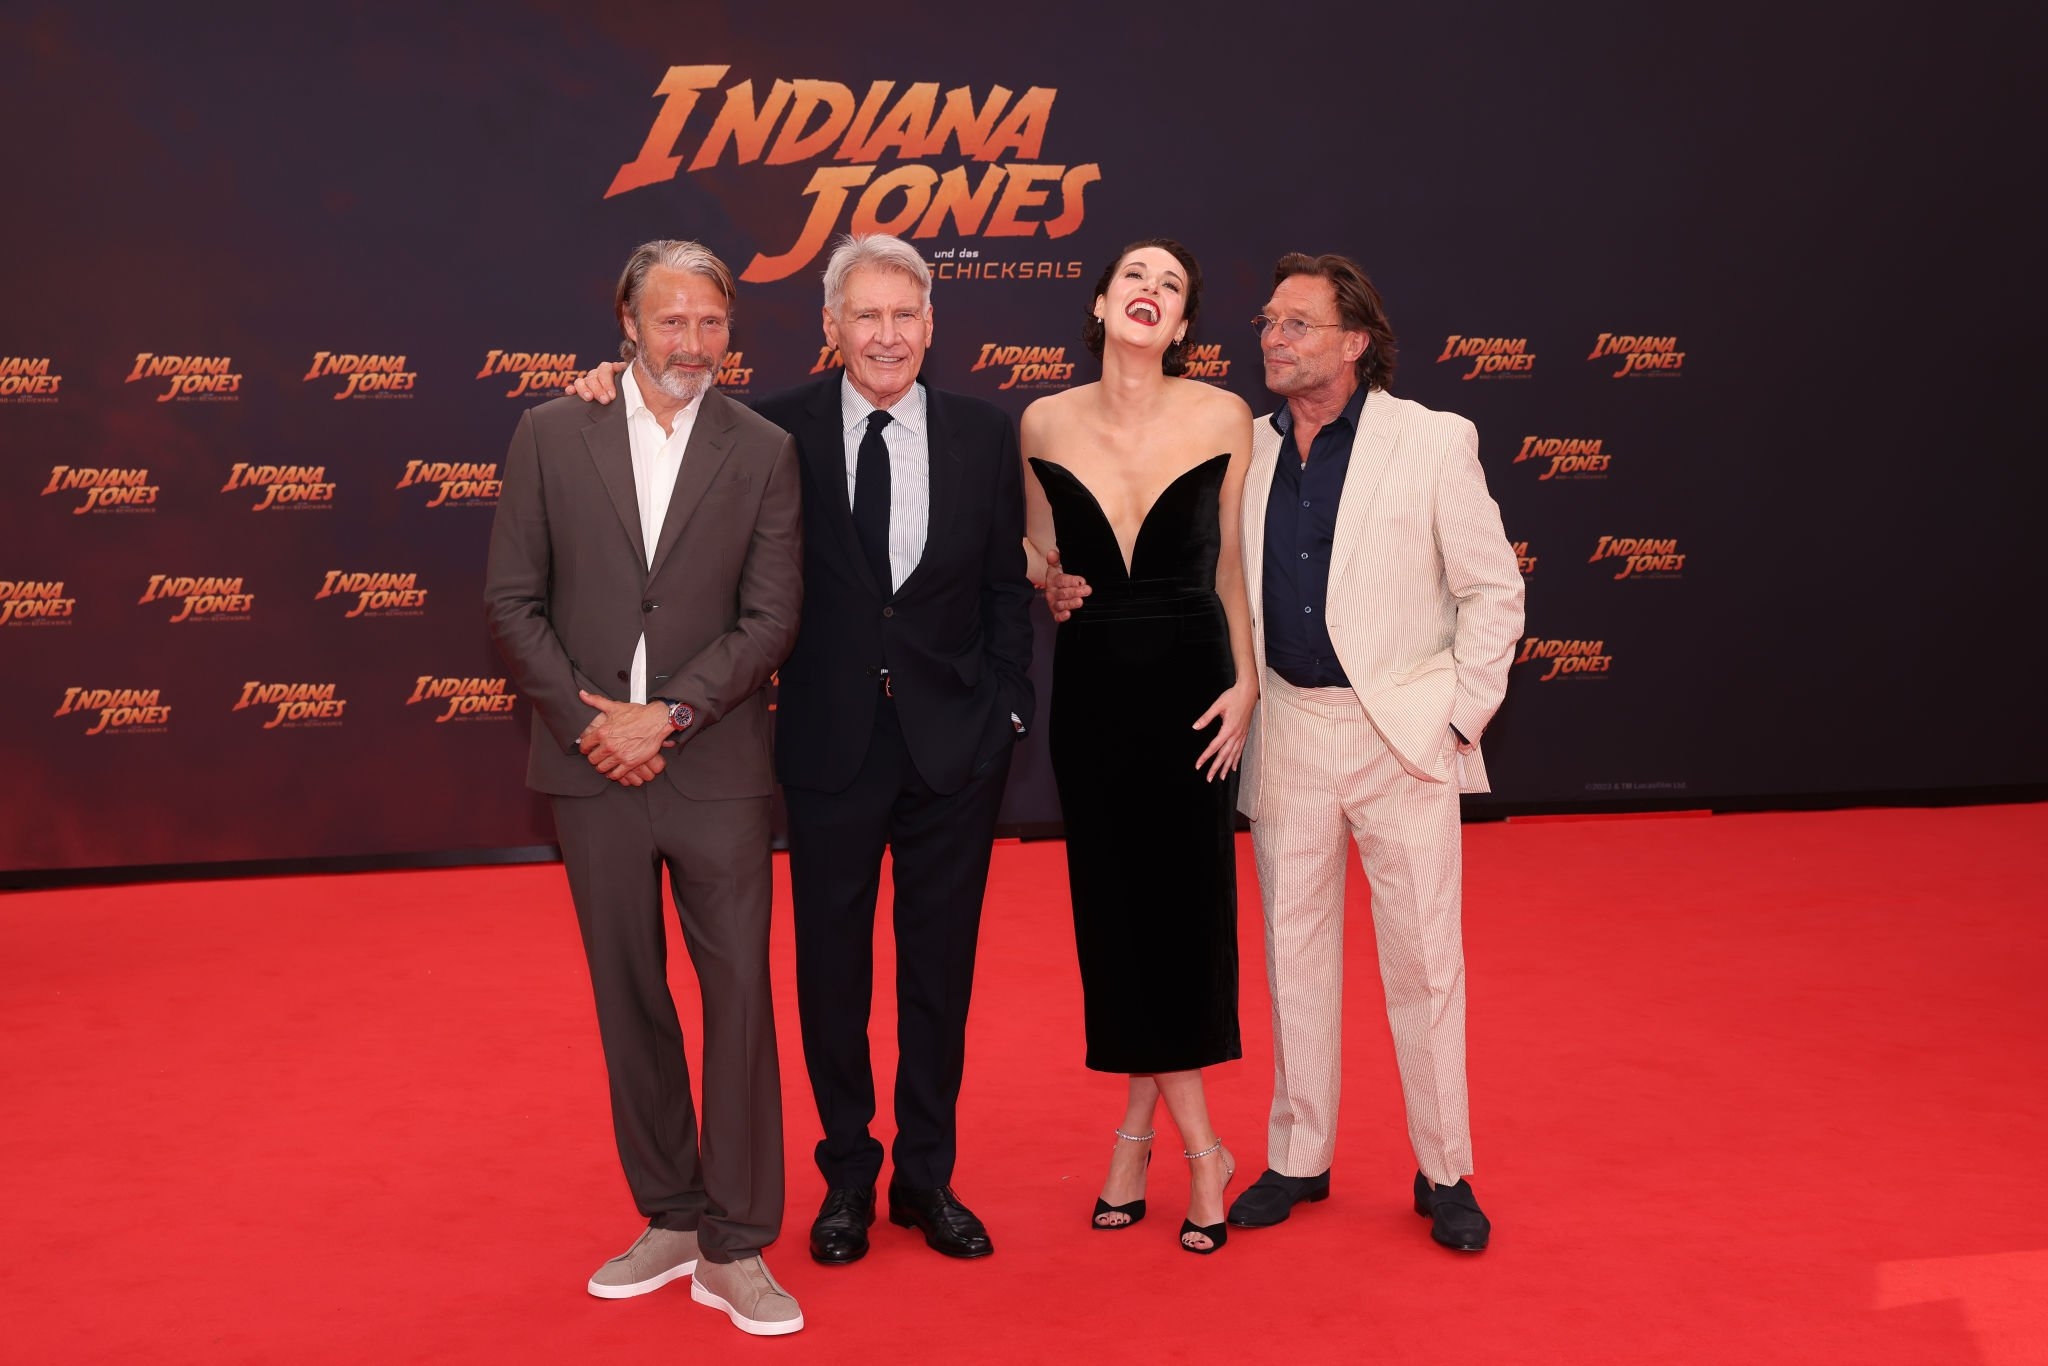 Mads Mikkelsen, Thomas Kretschmann, Phoebe Waller-Bridge and Harrison Ford attend the premiere of "Indiana Jones und das Rad des Schicksals" at Zoo Palast on June 22, 2023 in Berlin, Germany. 